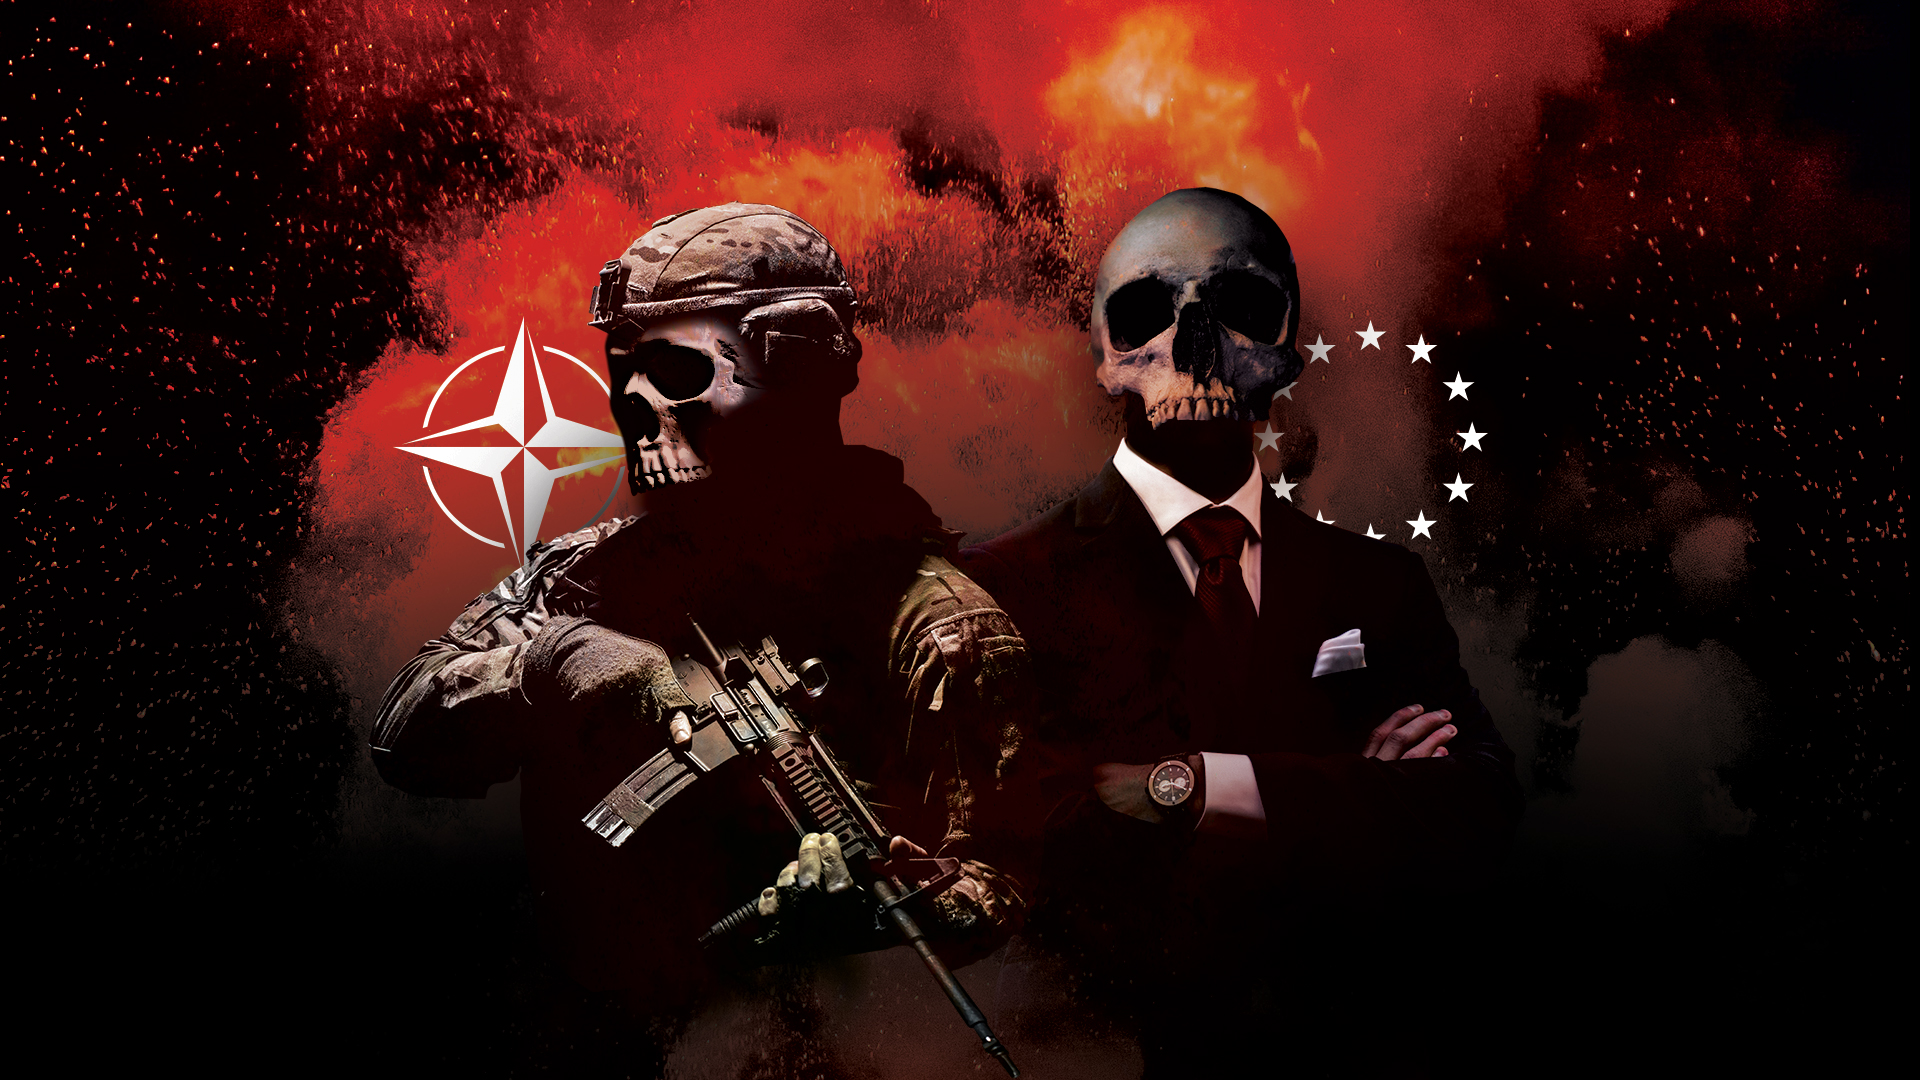 Thumb_Politiki_Kampania_KNE_NATO_EU